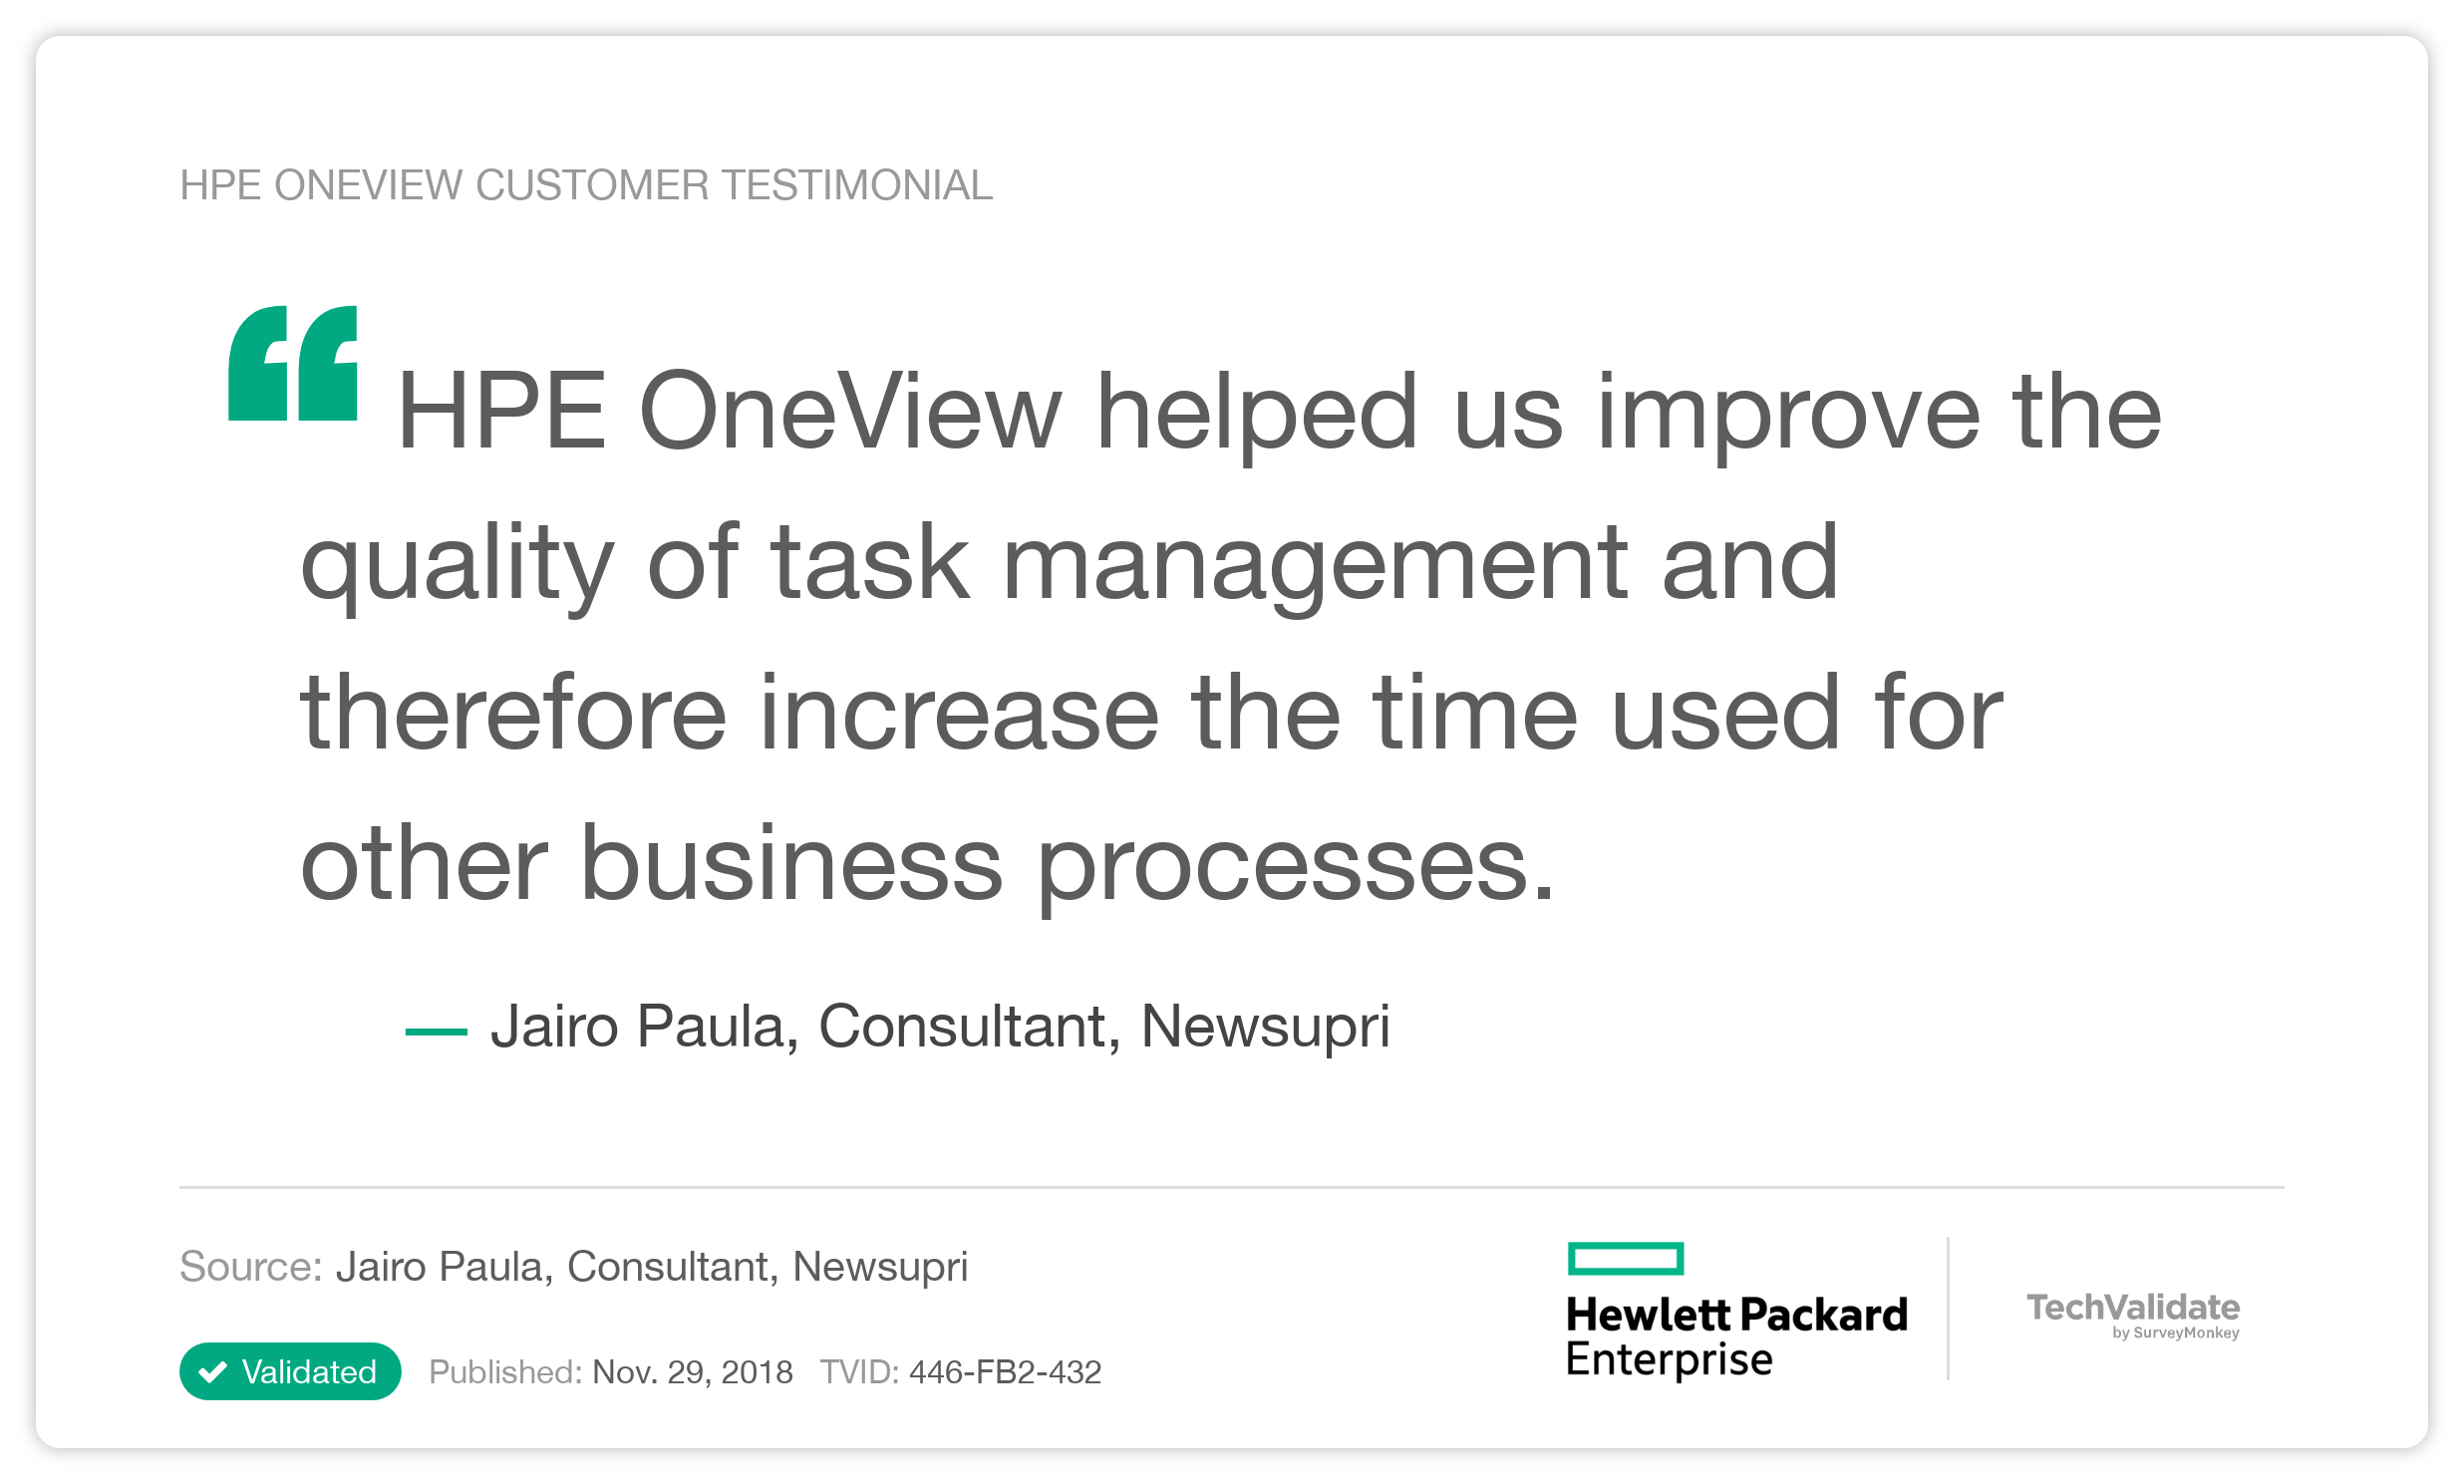 HPE OneView Customer Testimonial